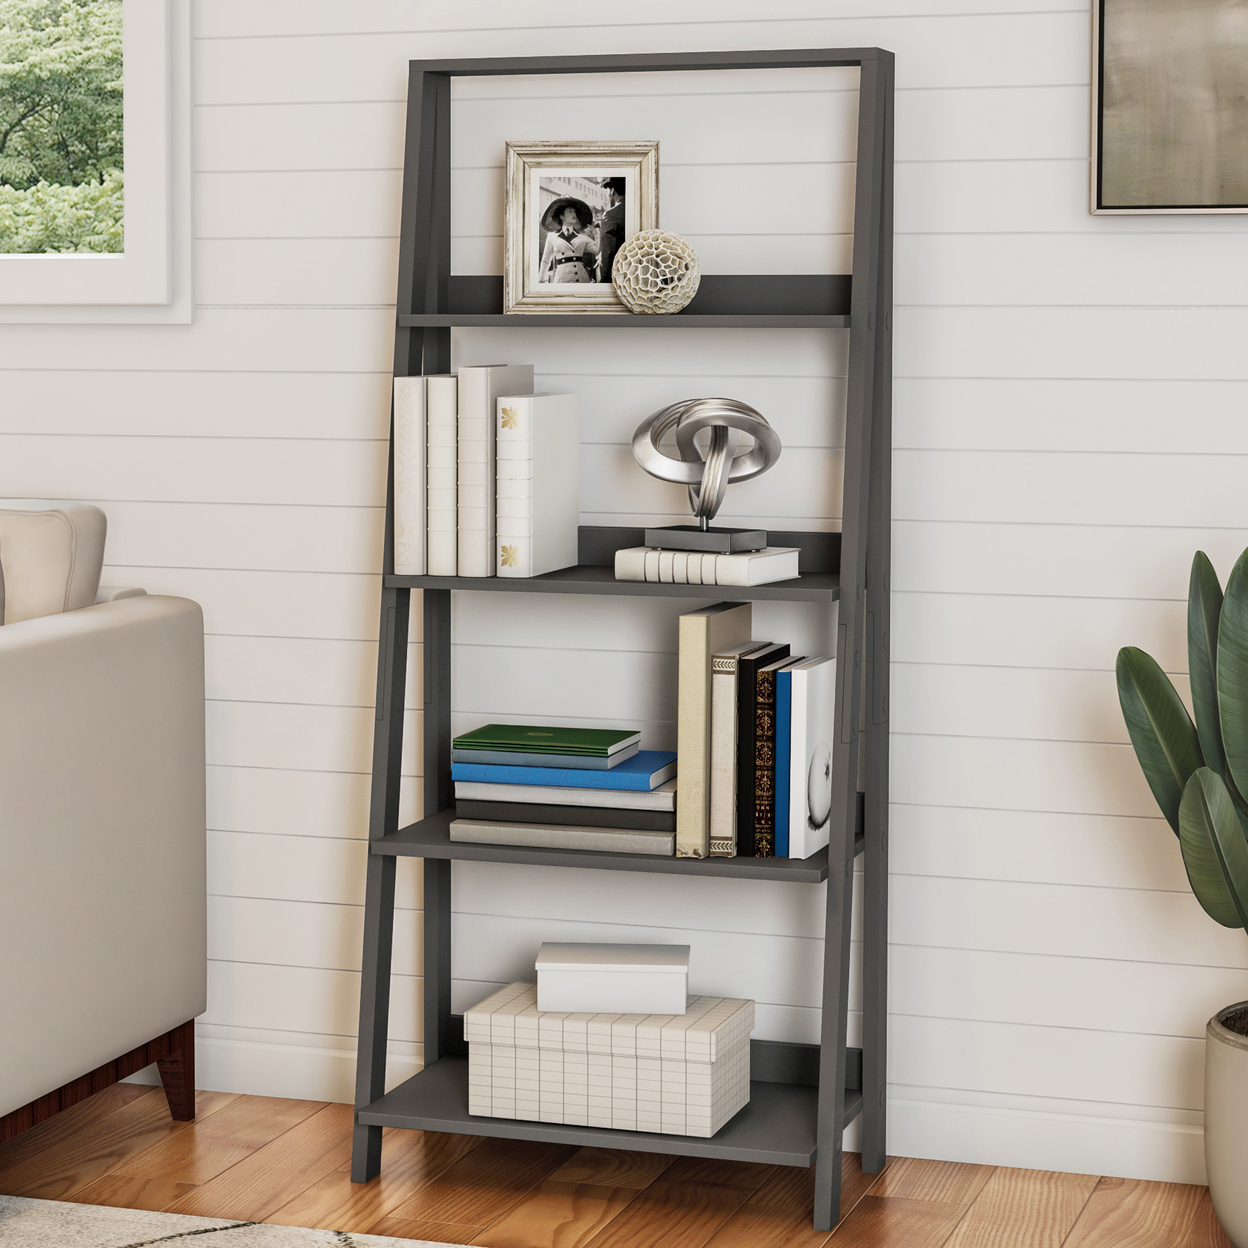 4 Tier Ladder Bookshelf Free Standing Wooden Gray Bookcase